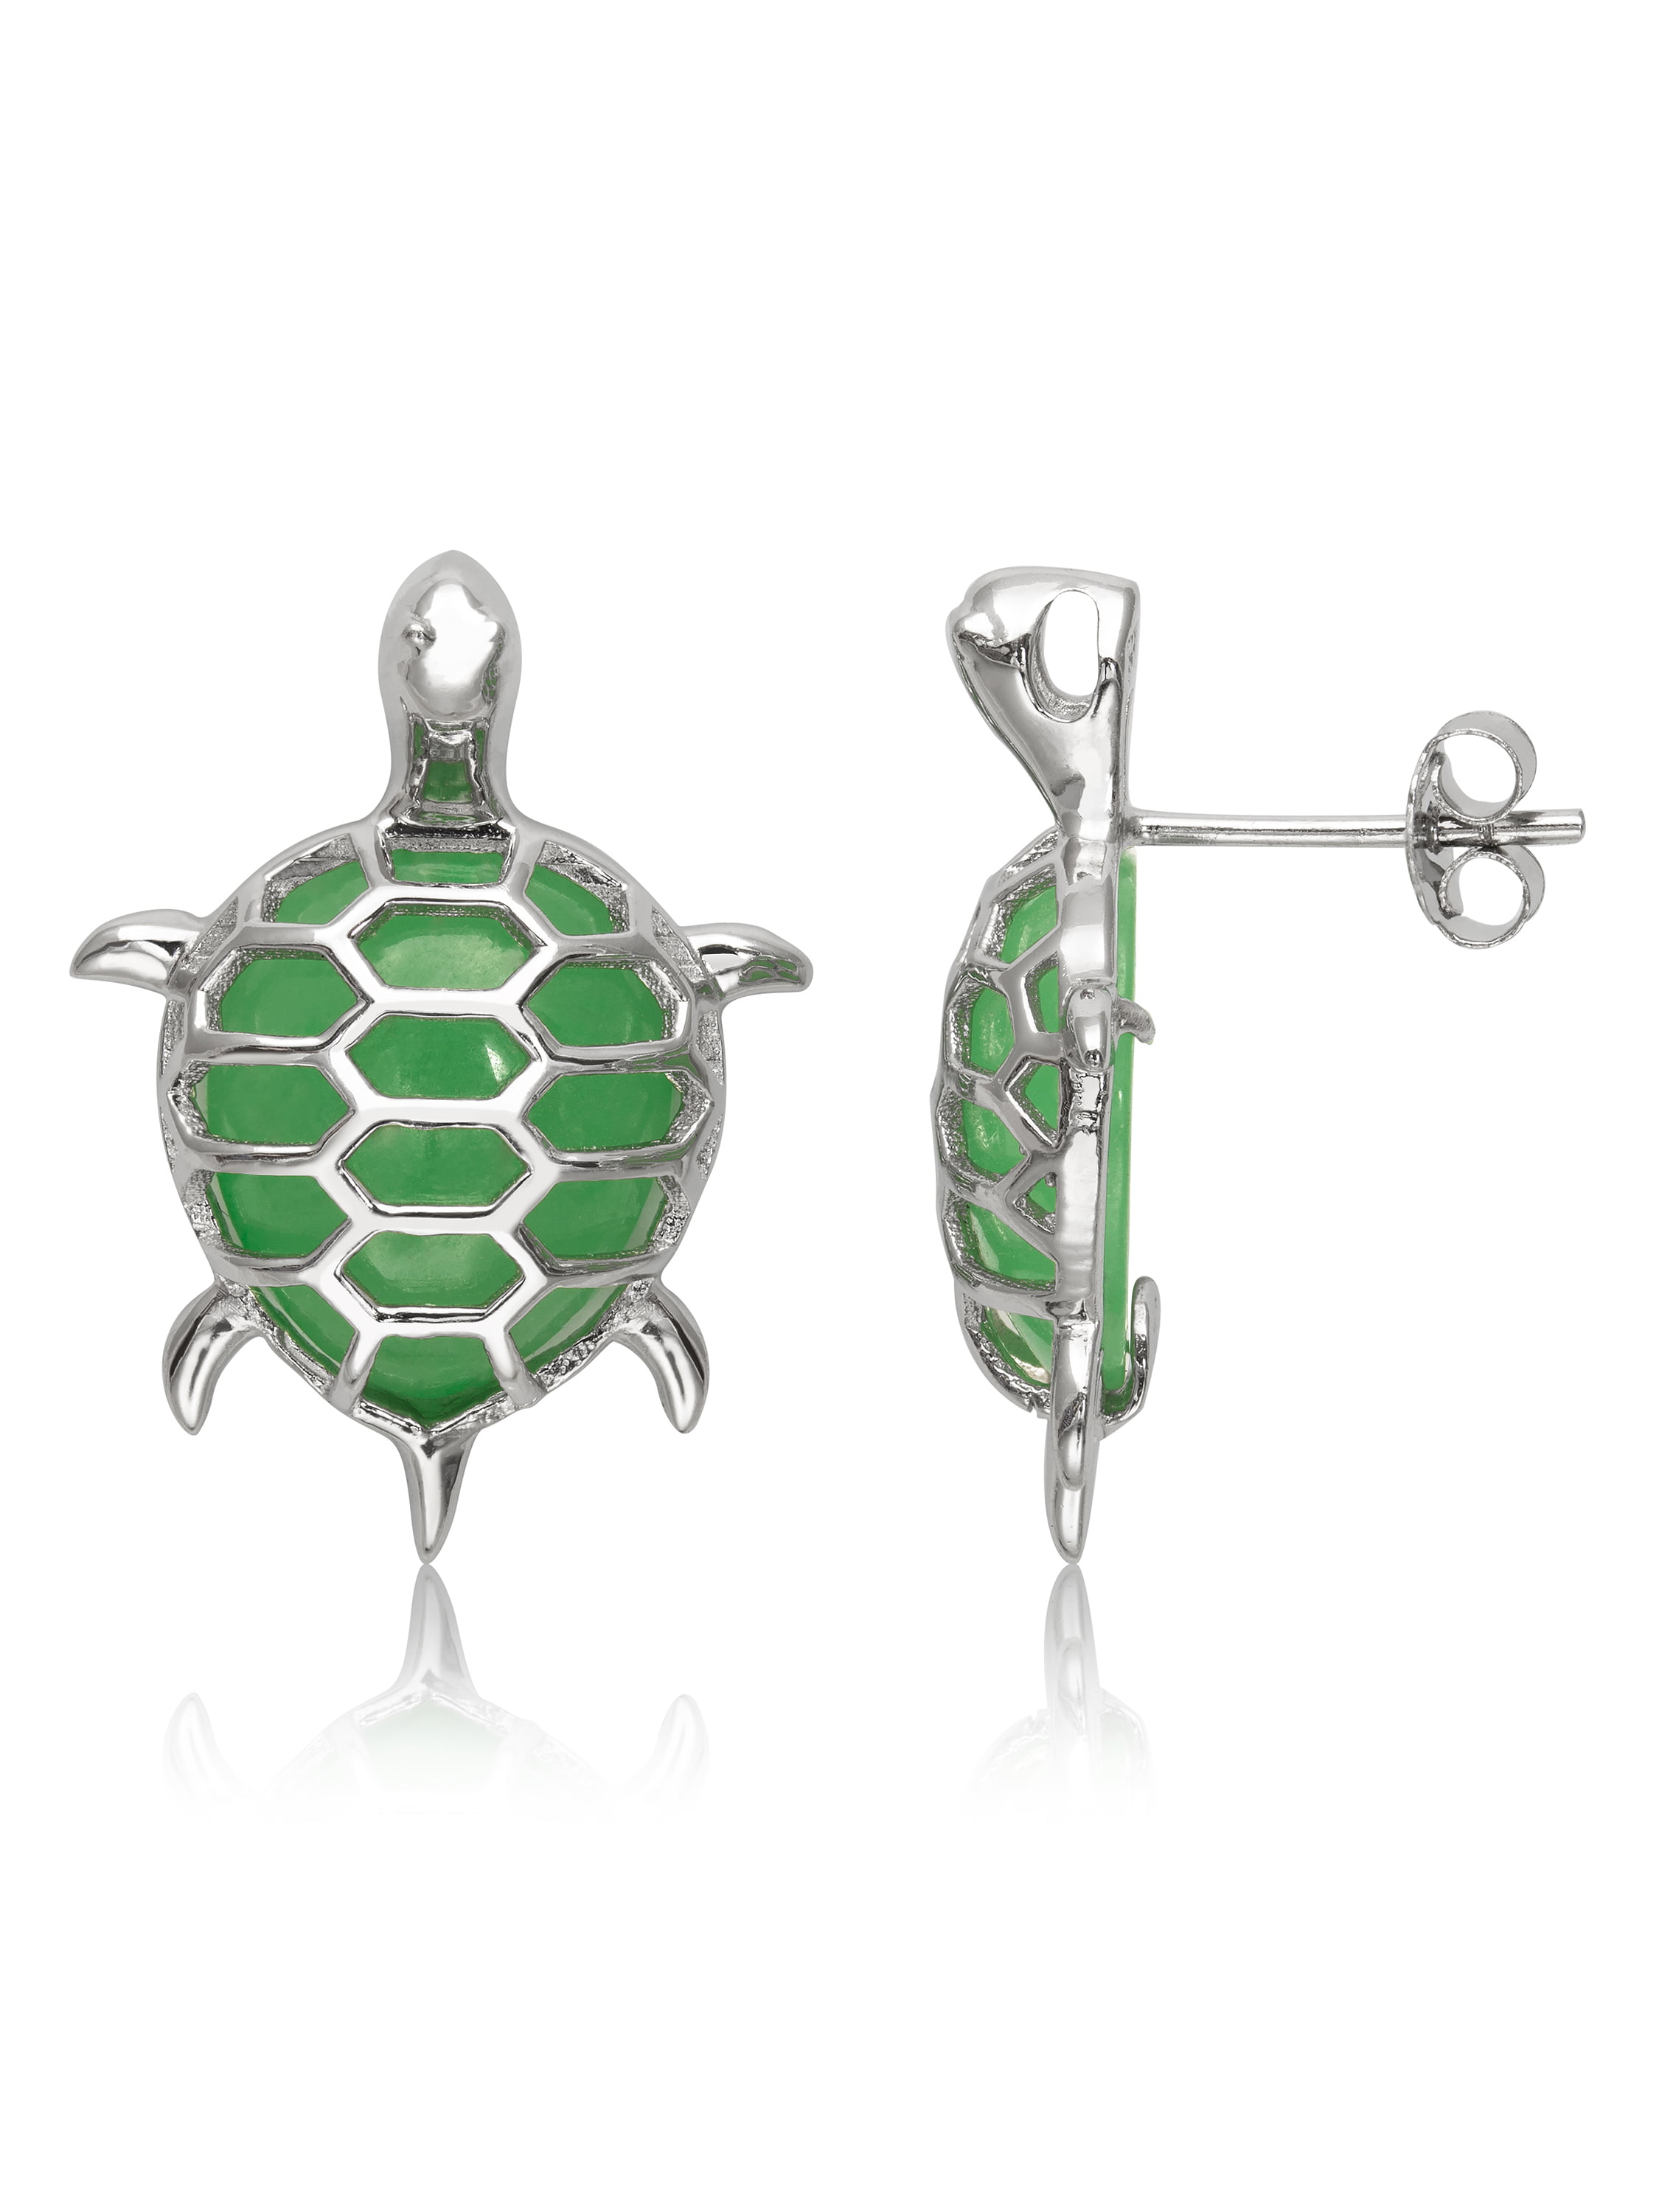 Natural Green Jade and Sterling Silver Turtle Stud Earrings - Walmart.com